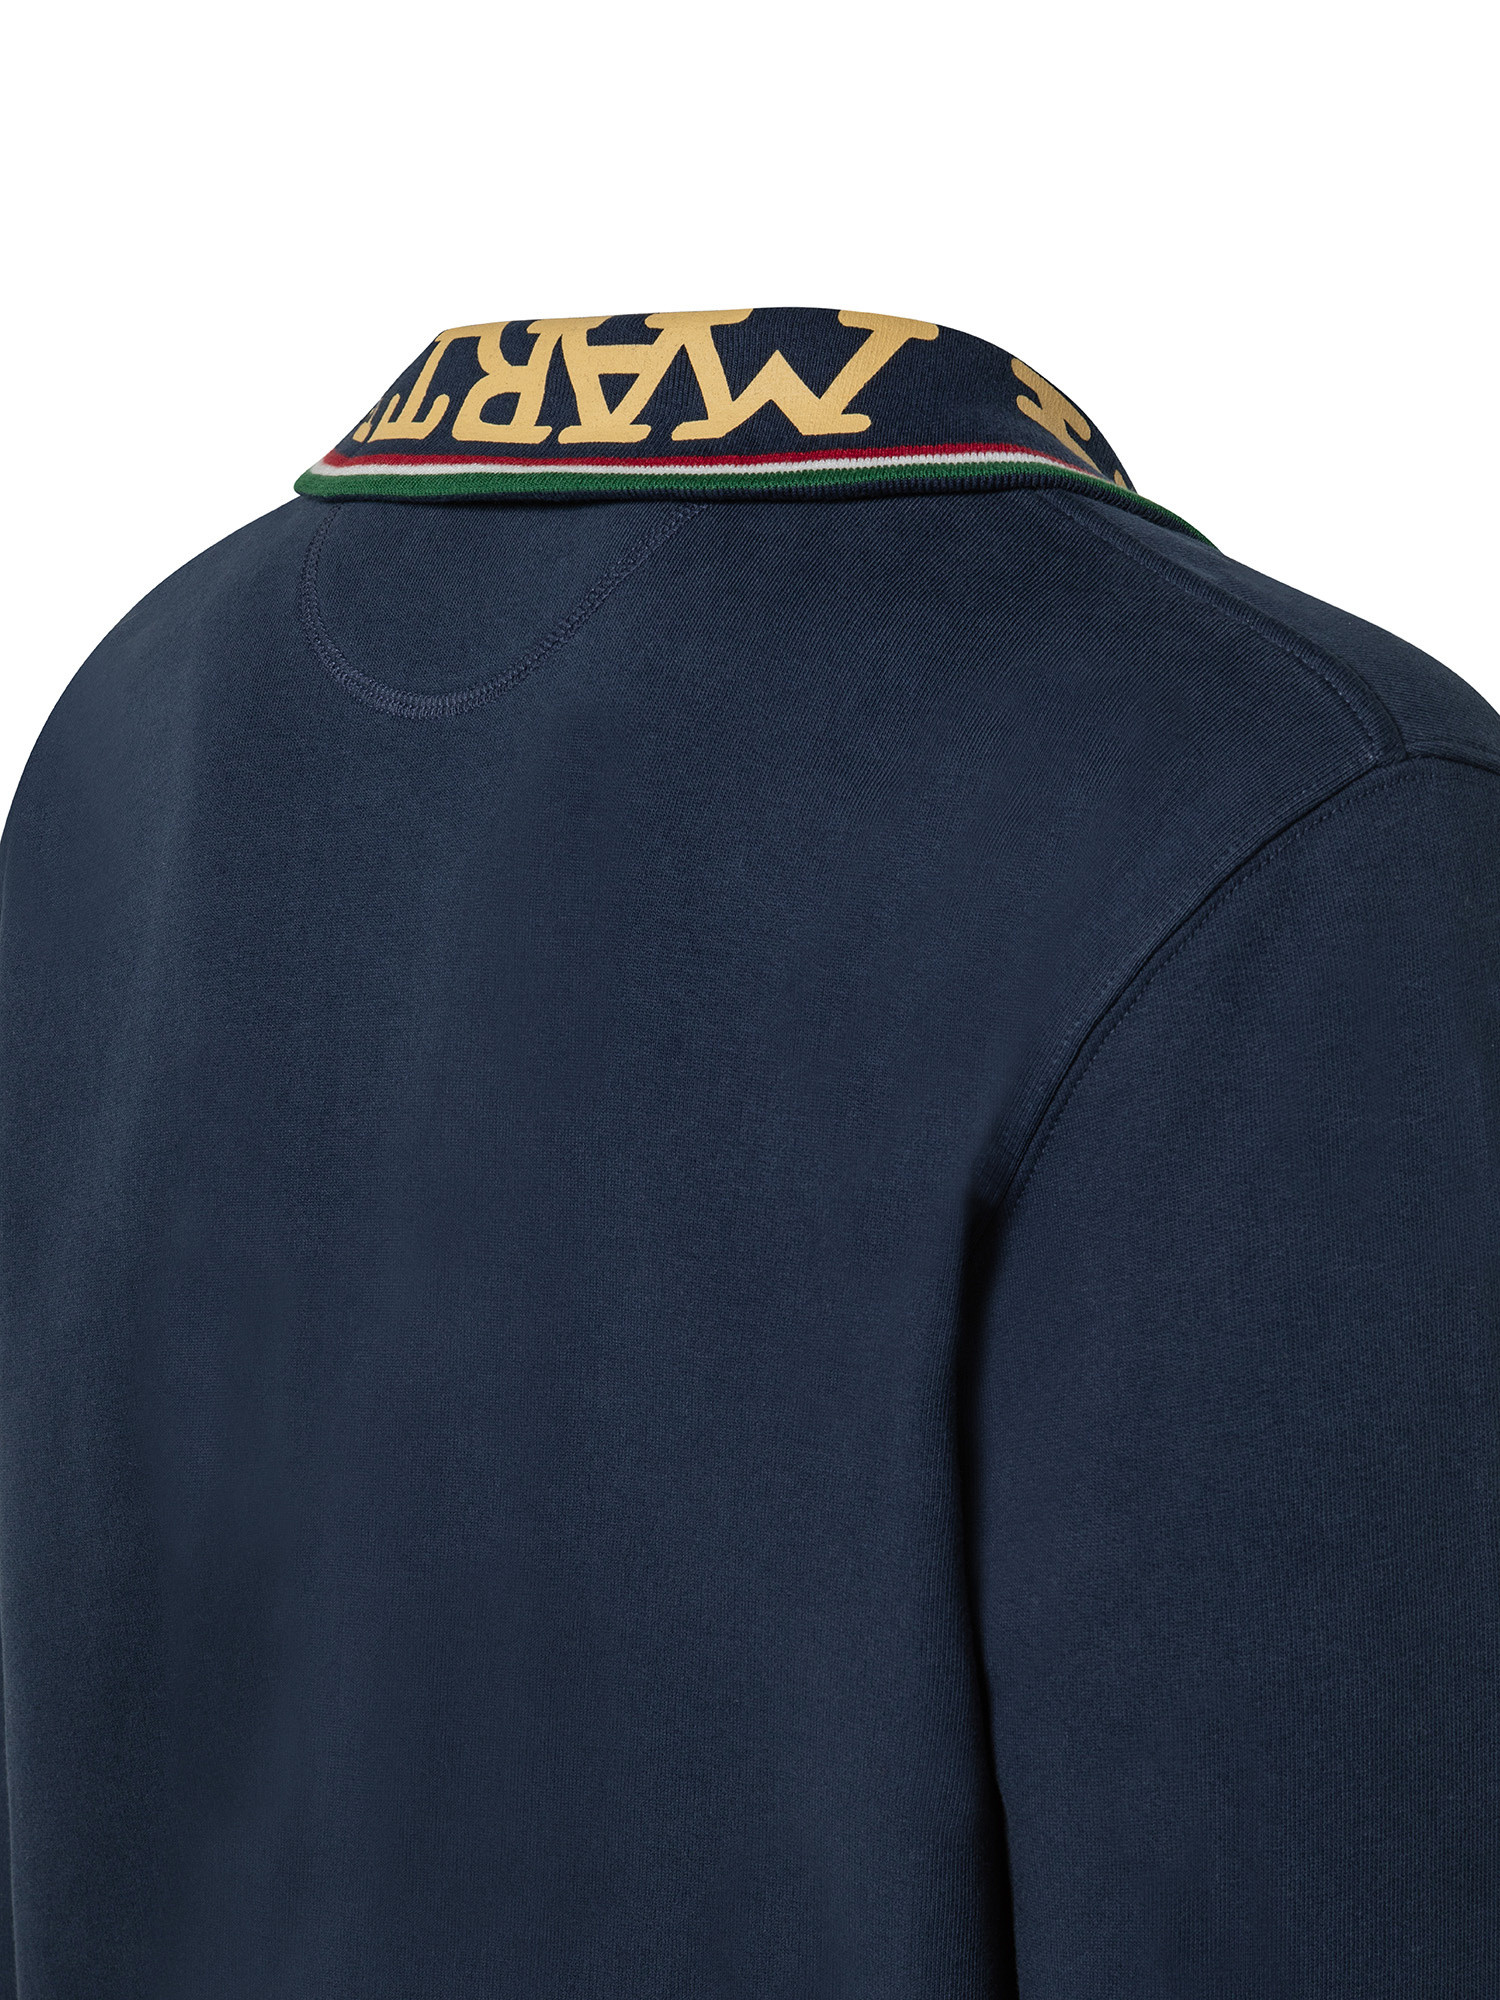 Long-sleeved sweatshirt in pure cotton comfort fit, Dark Blue, large image number 1